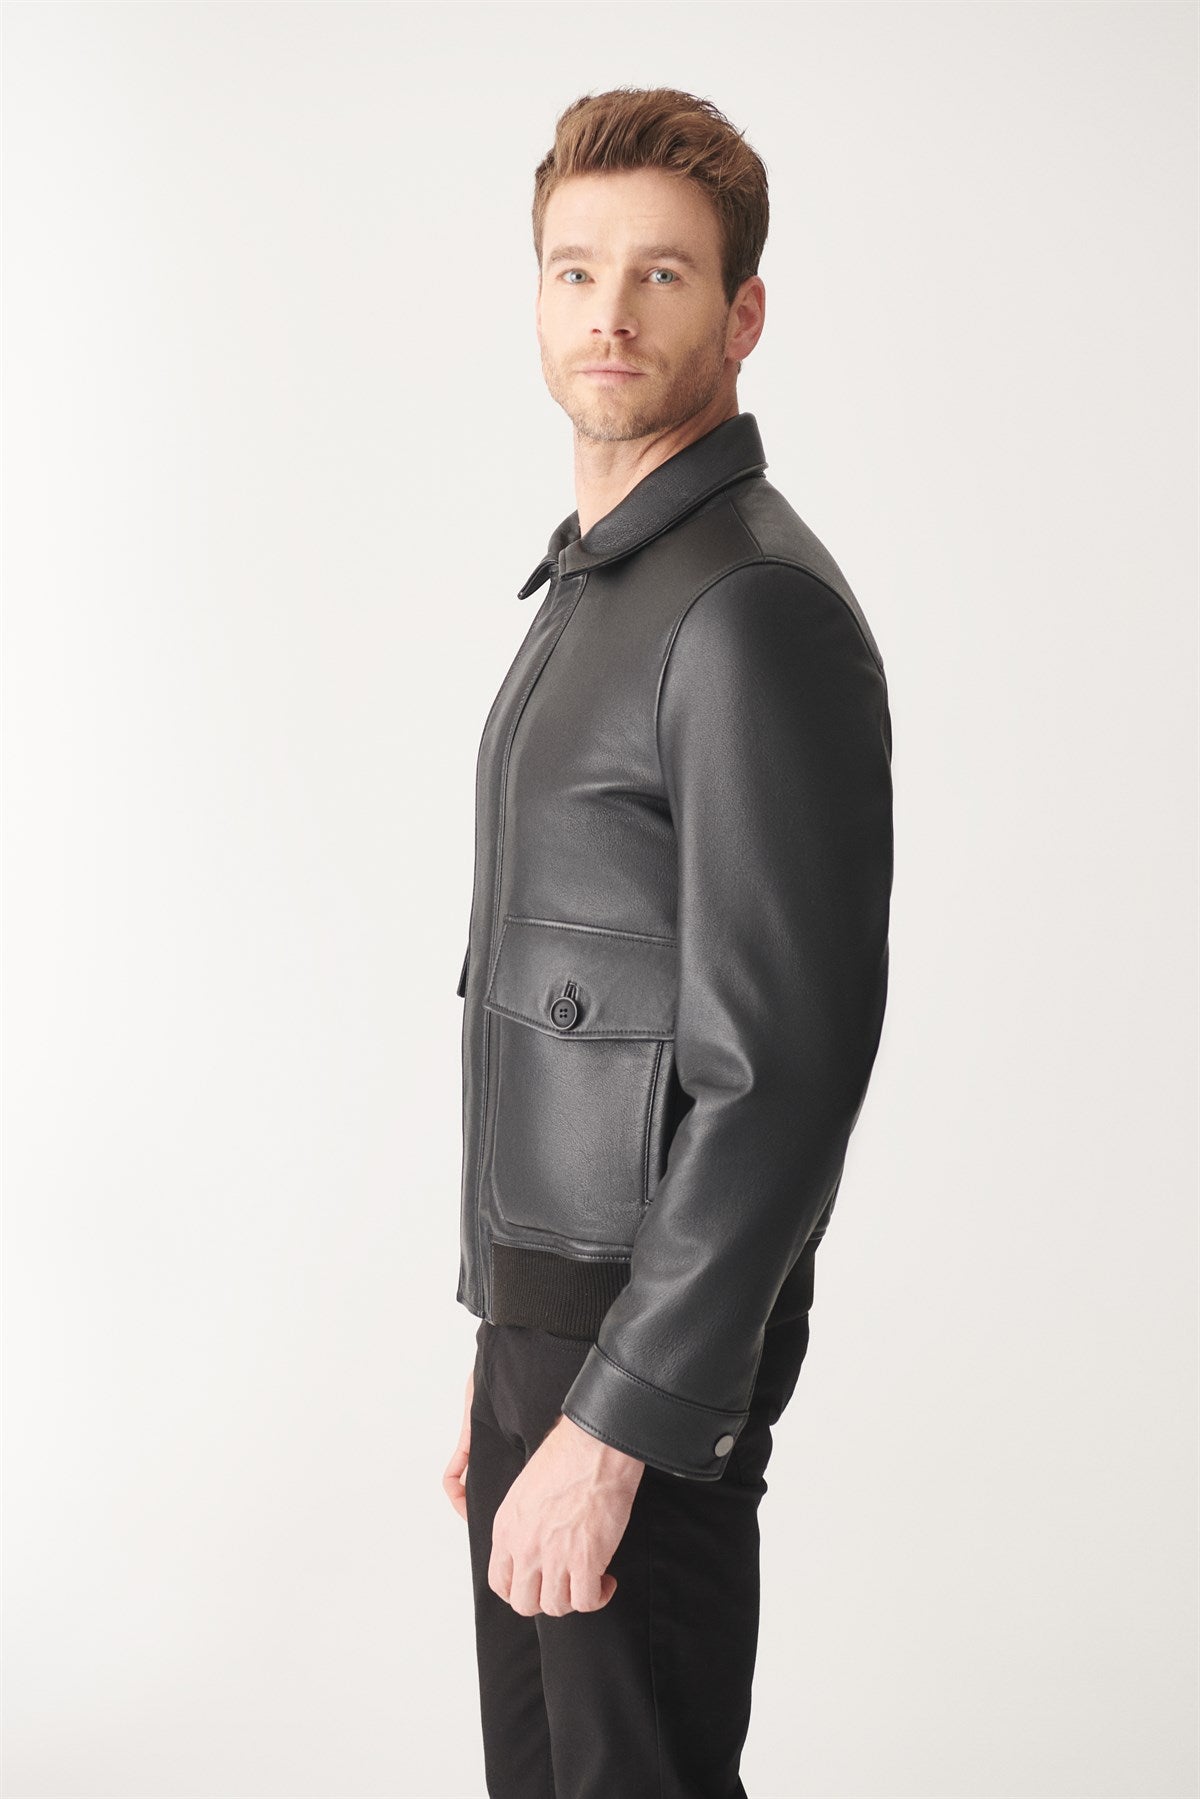 Black Bomber Leather Jacket for Men - LJ